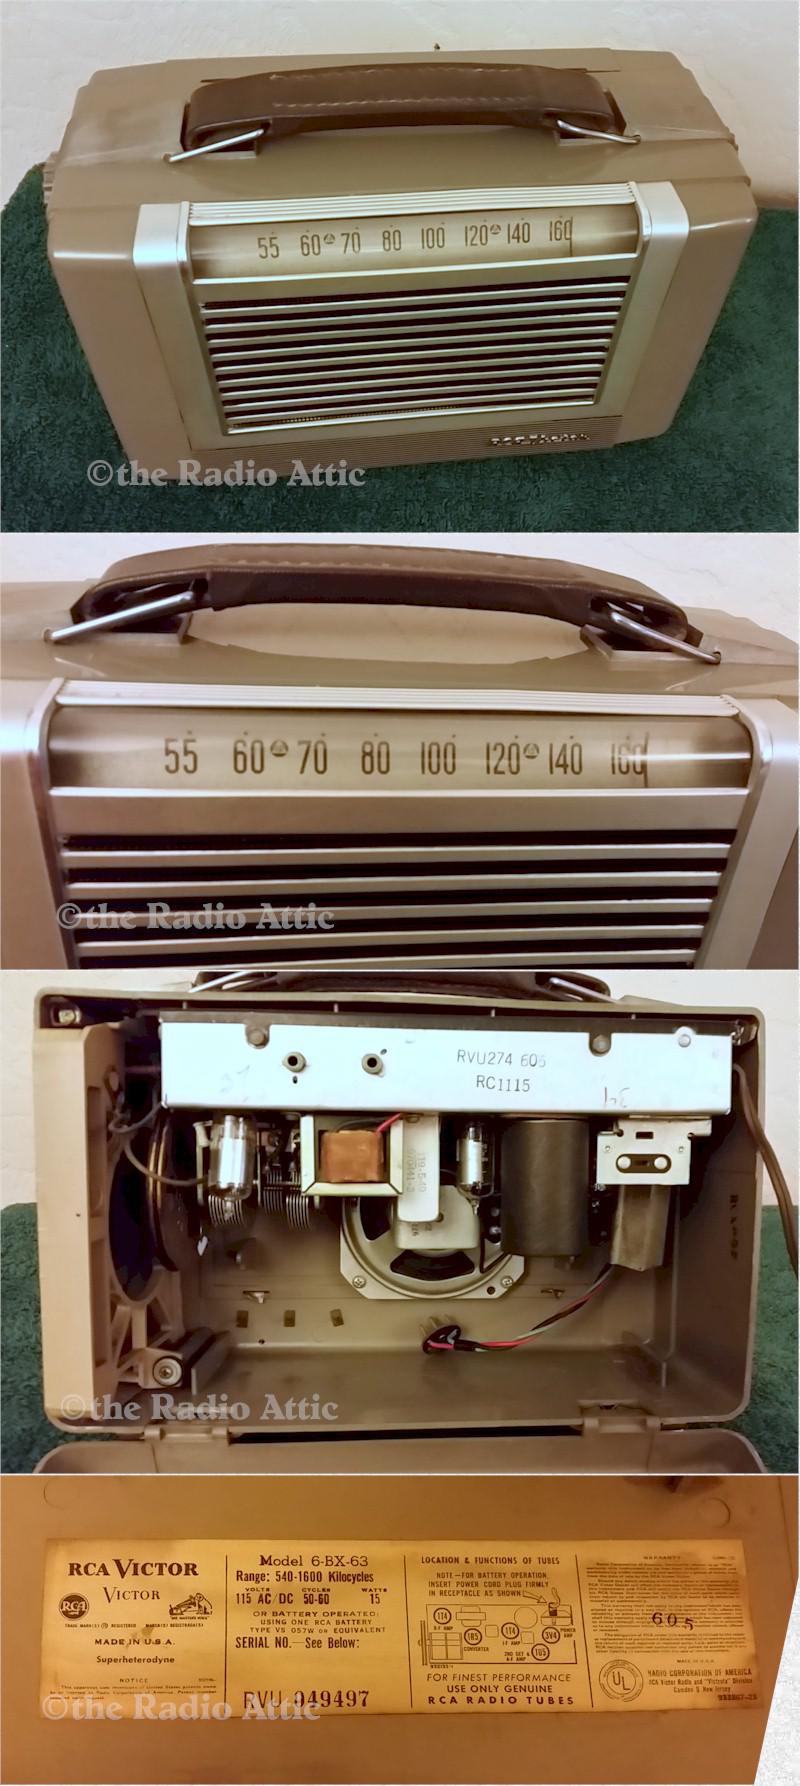 RCA 6-BX-63 Portable (1956)